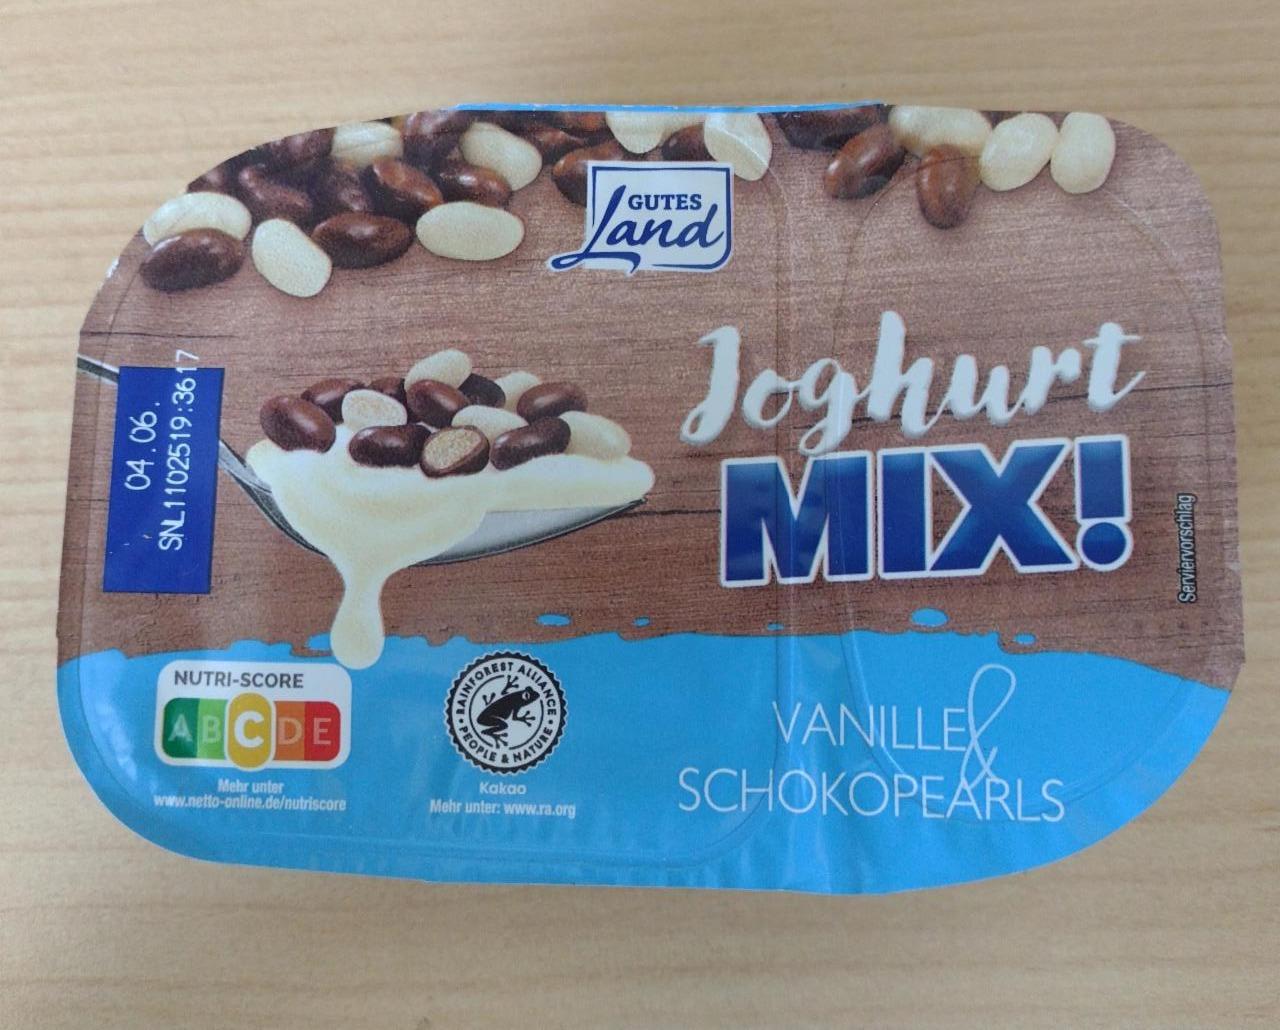 Fotografie - Joghurt Mix! Vanille & Schokopearls Gutes Land